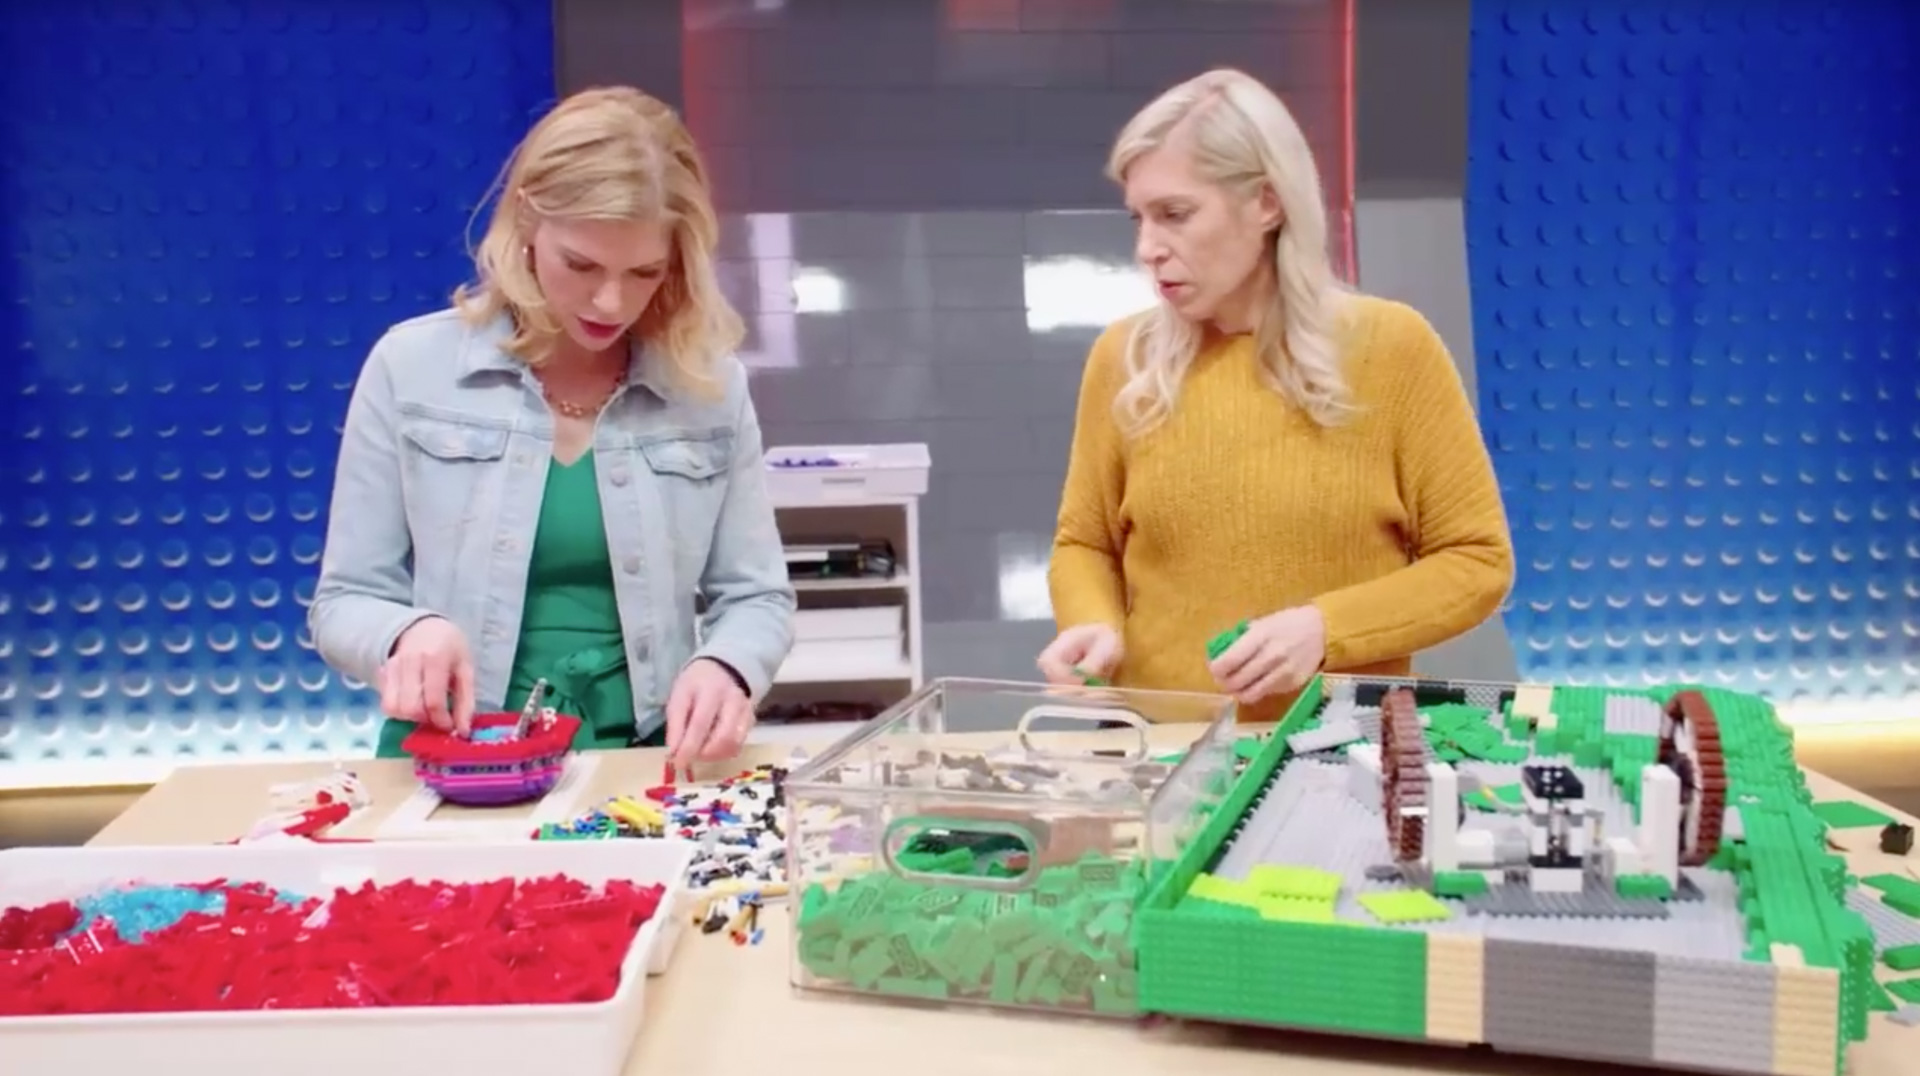 LEGO Masters U.S Season 2 – LEGO Parade Day – Susan and Jen - Becoming